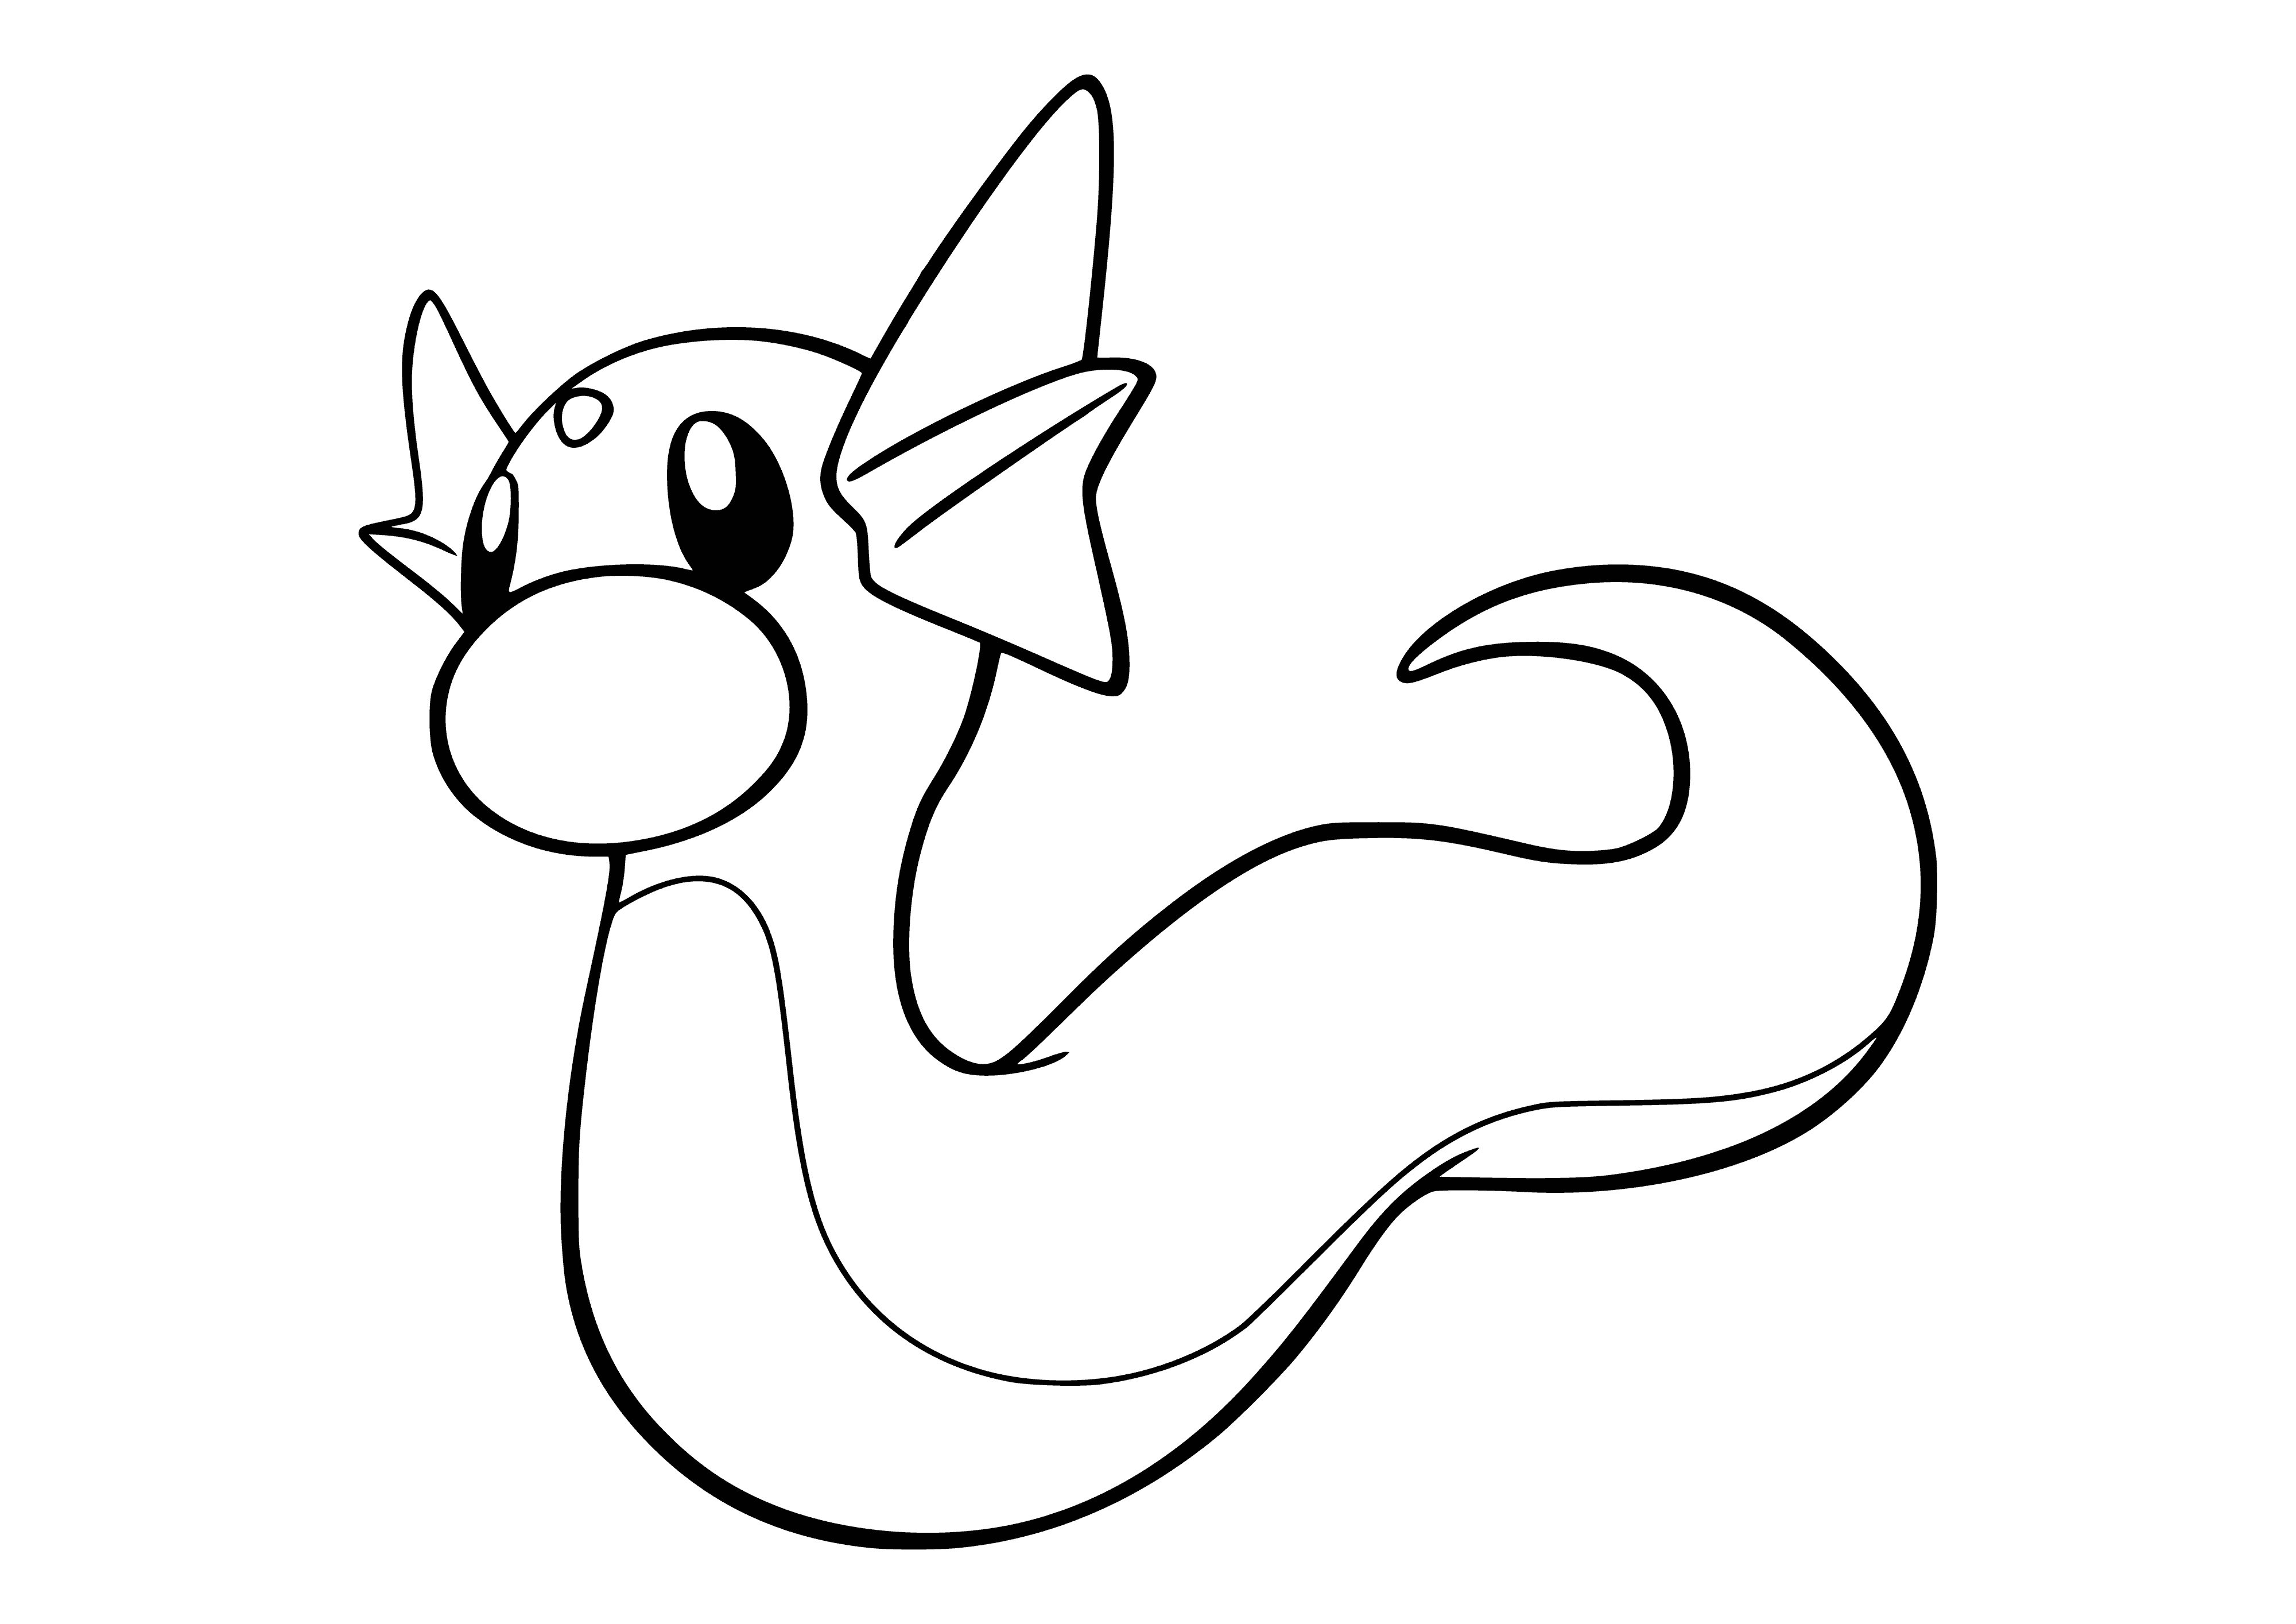 Pokemon Dratini (Dratini) coloring page